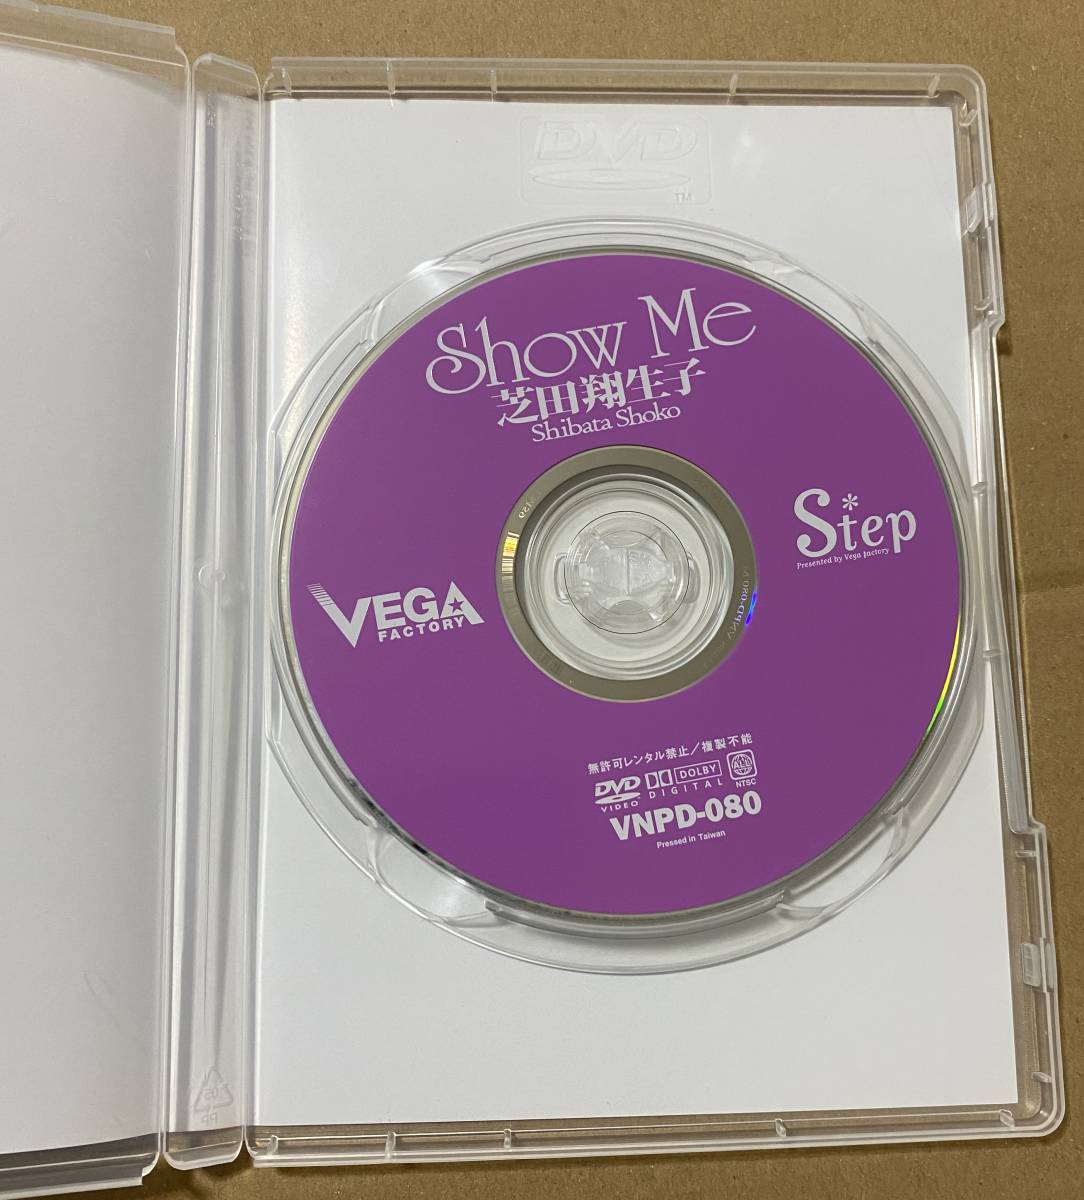 DVD SHOW ME 芝田翔生子 fkip.unmul.ac.id